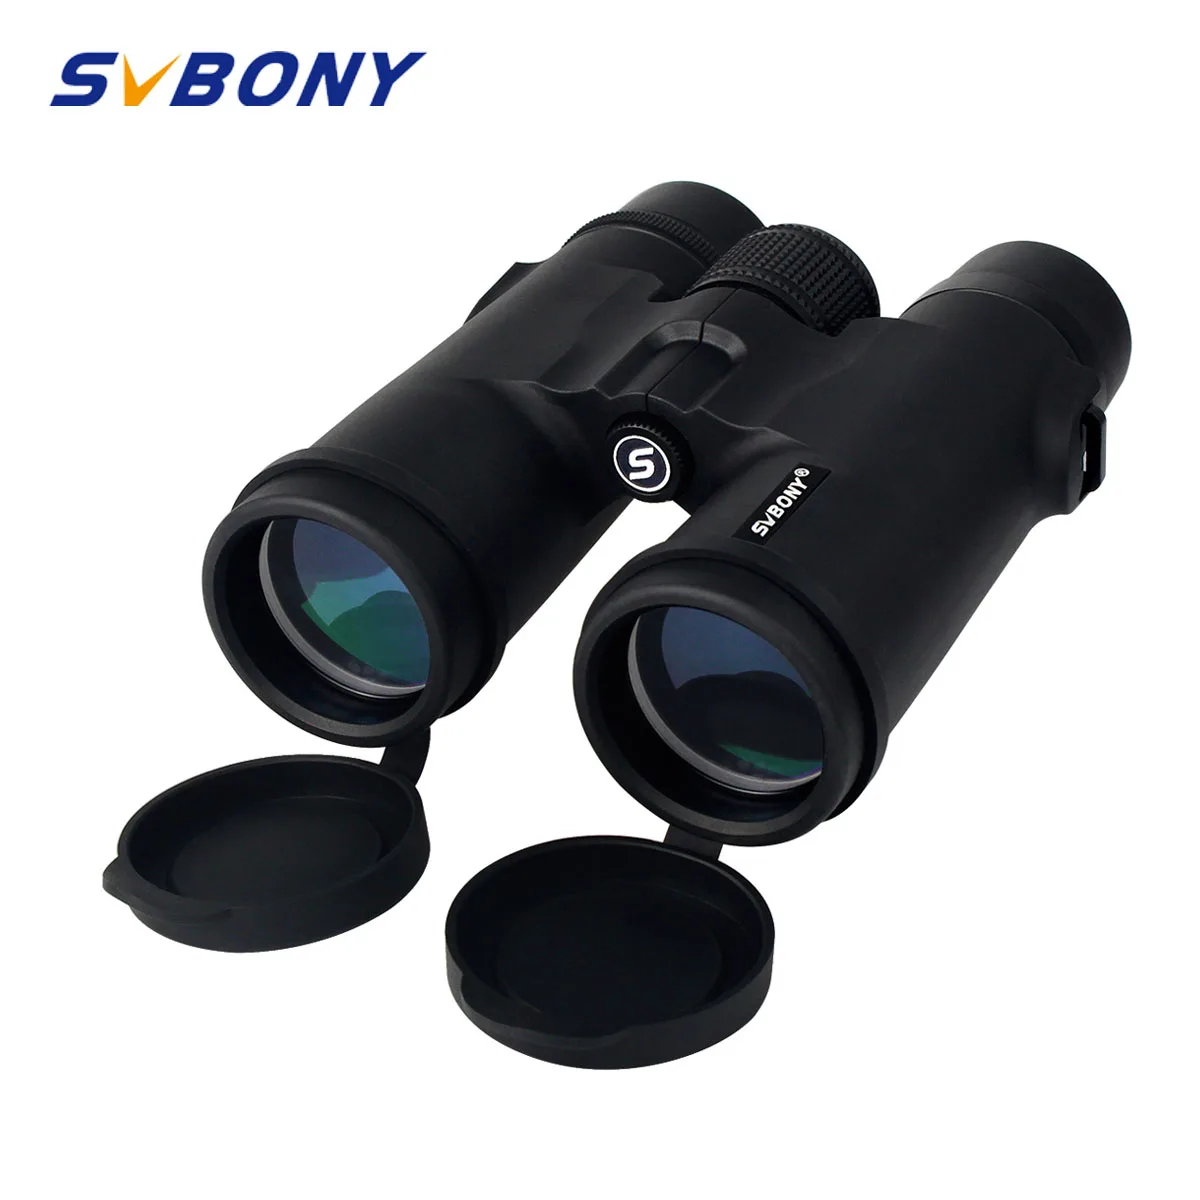 

SVBONY Binoculars 8x32/8x42/10x42 MC Optical Coating BK7 Prism High Power Telescope SV21 Powerful Binoculars for Hunting F9117